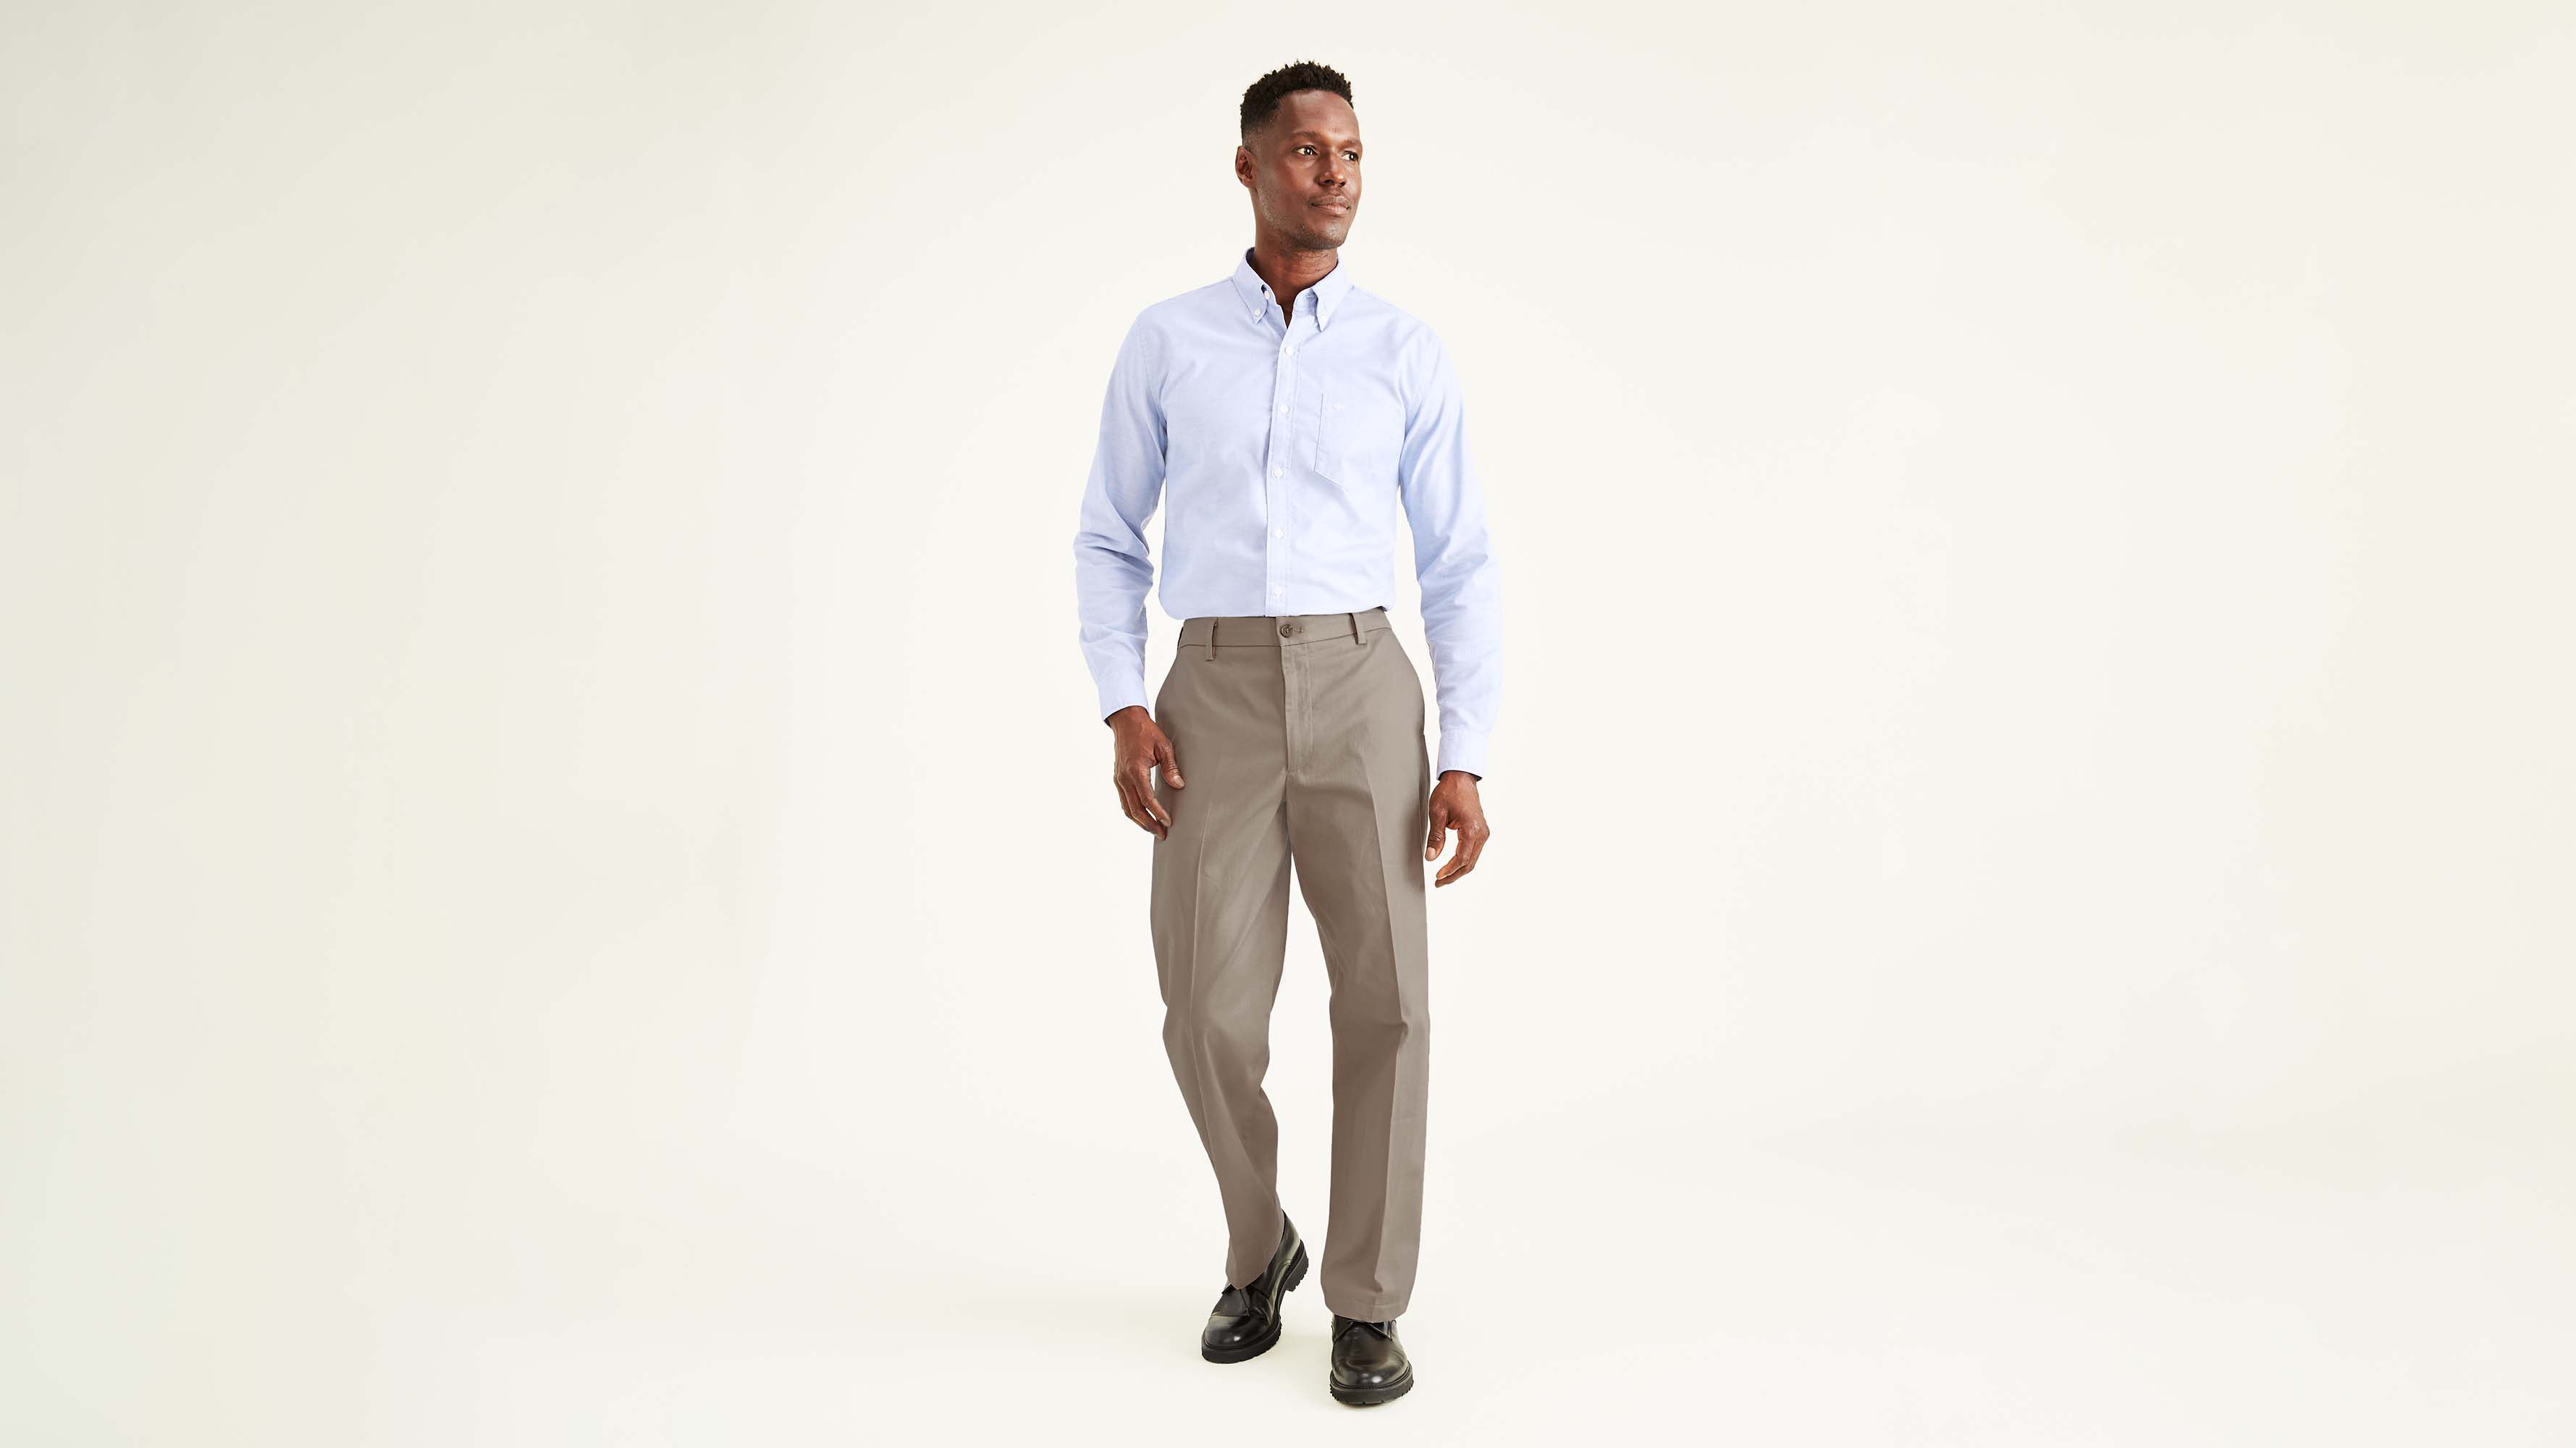 men's business casual khaki pants